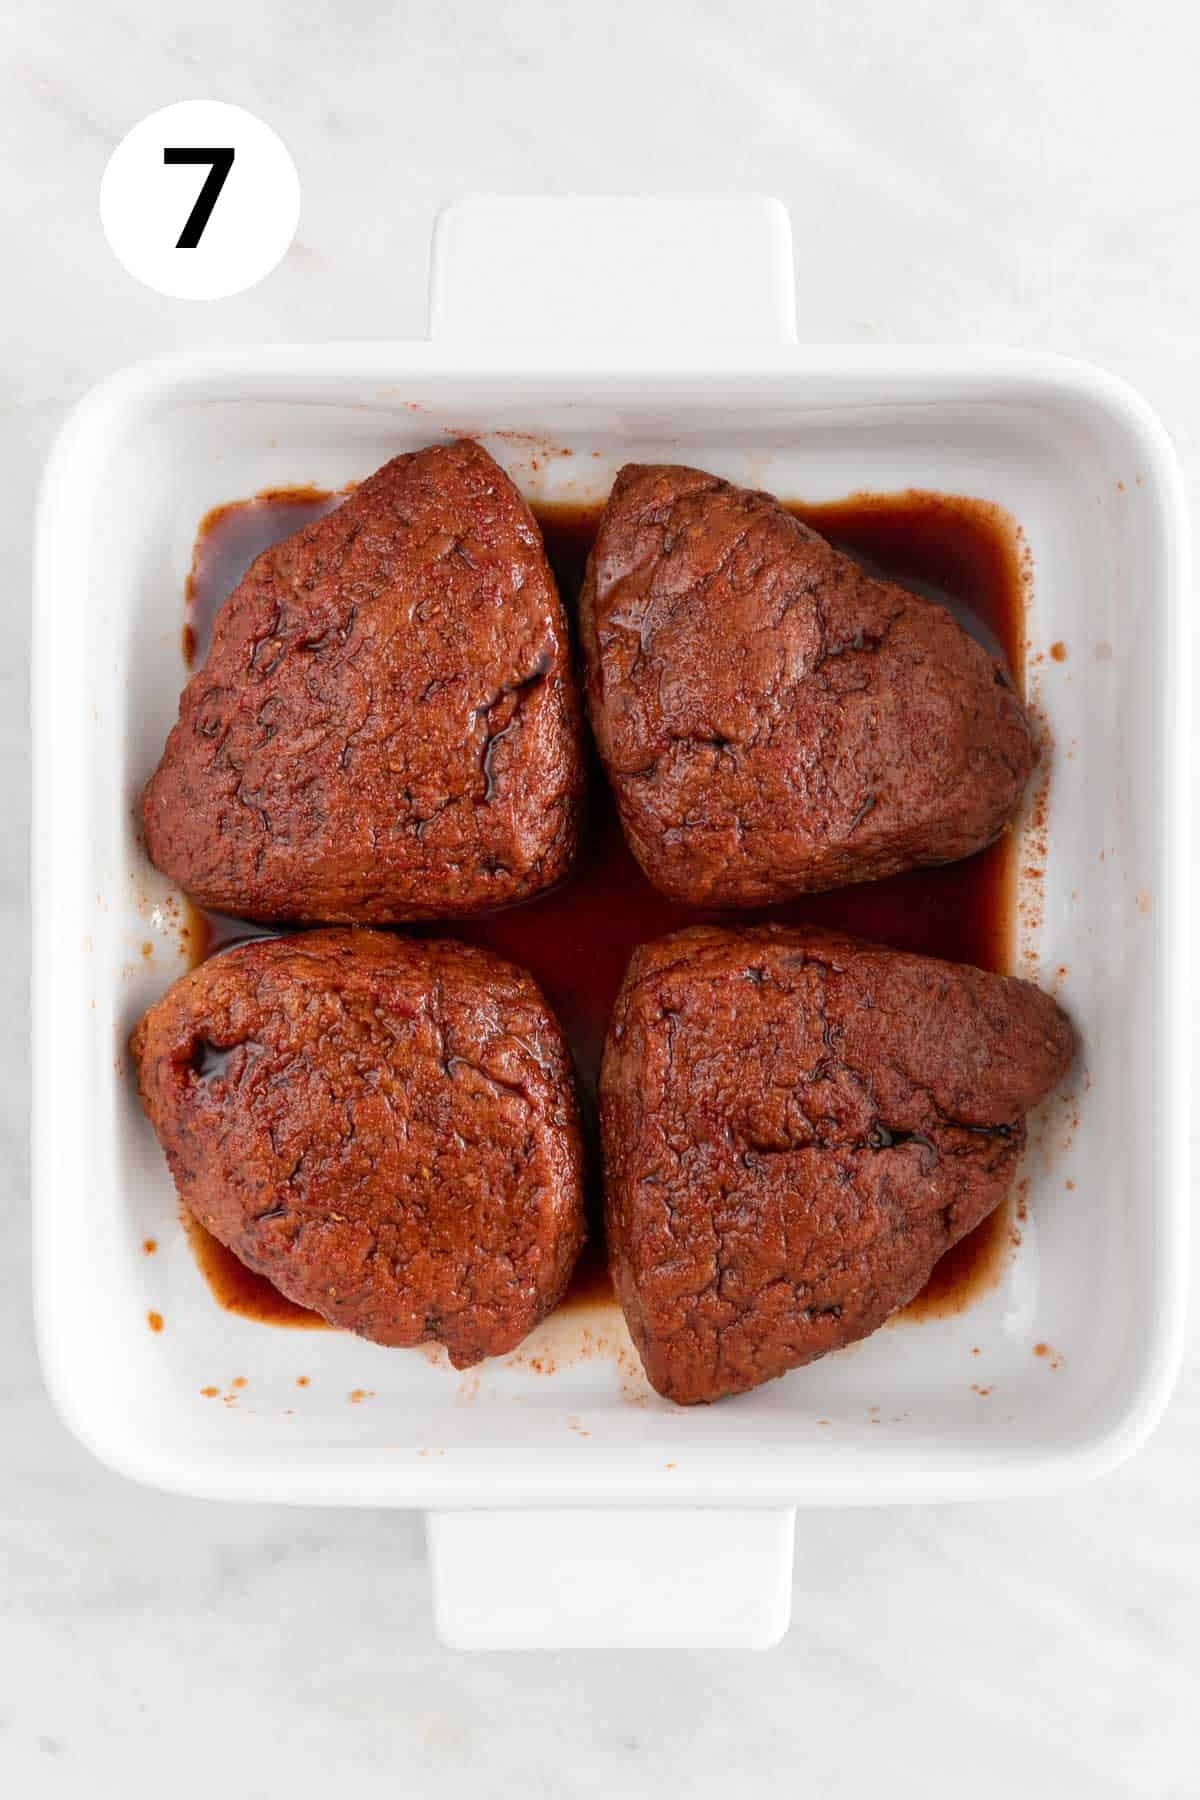 The vegan steaks soaking in the marinade.